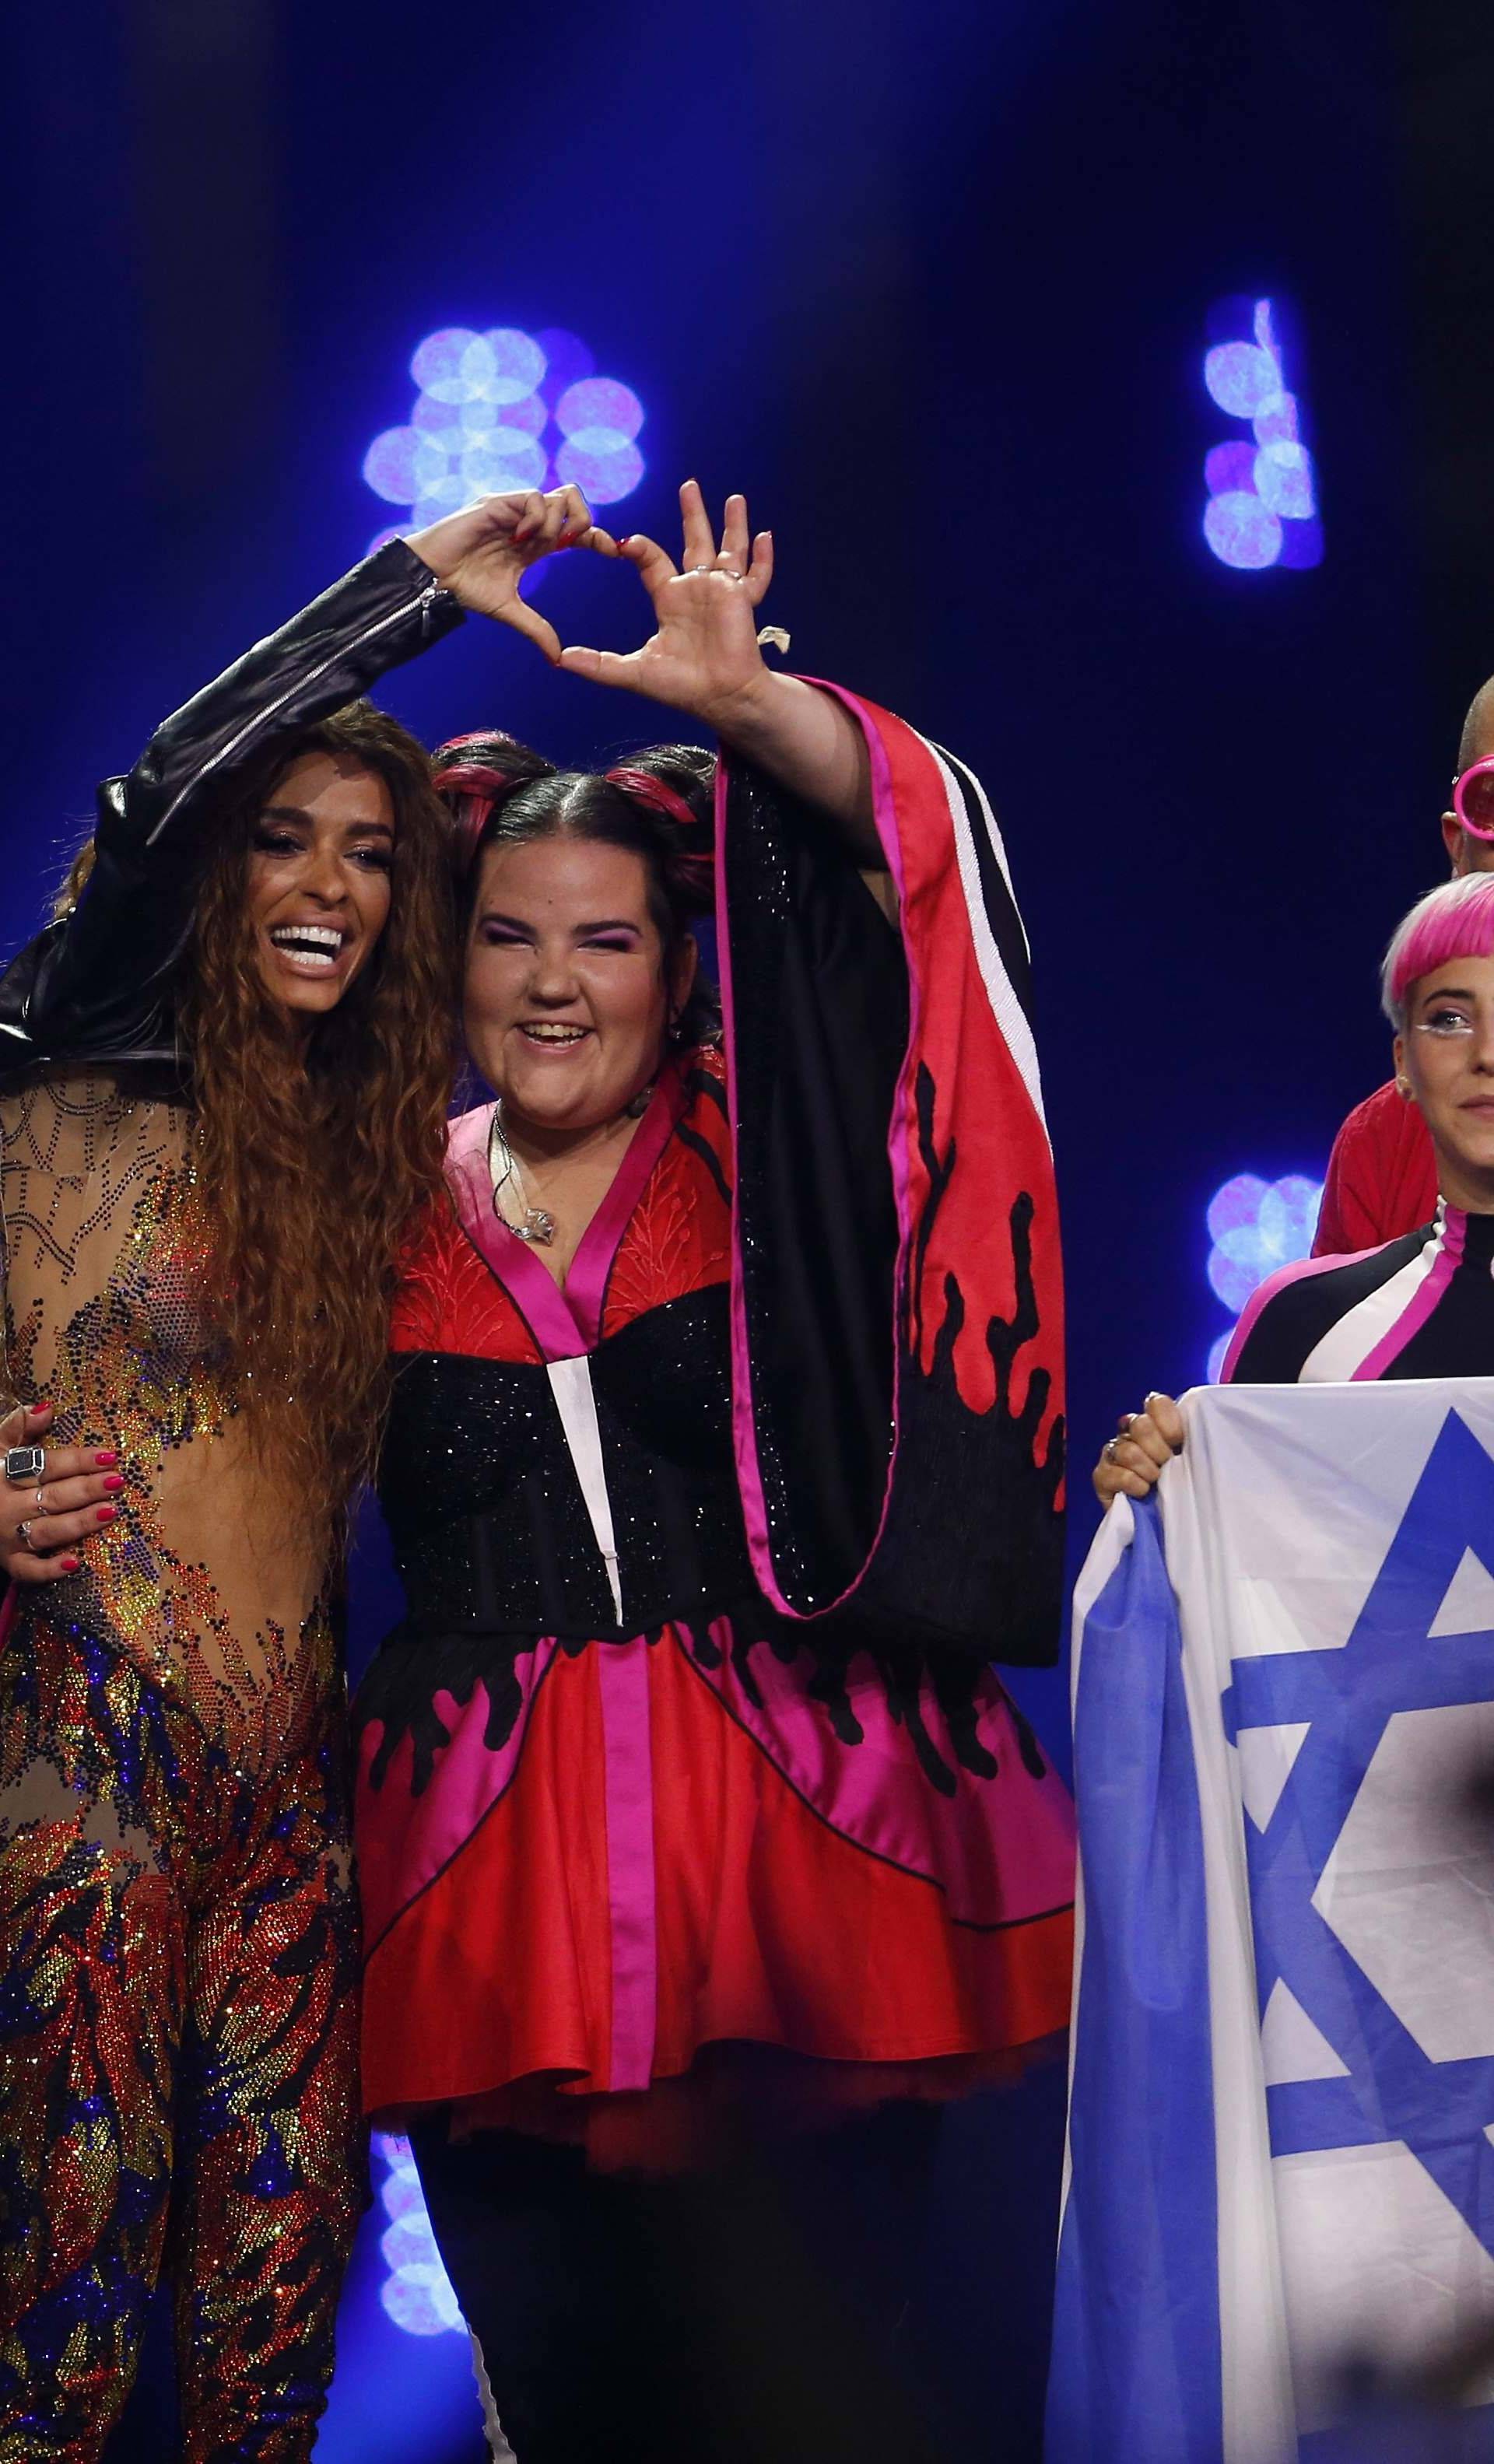 Cyprusâs Eleni Foureira and Israelâs Netta react after the Semi-Final 1 for Eurovision Song Contest 2018 in Lisbon